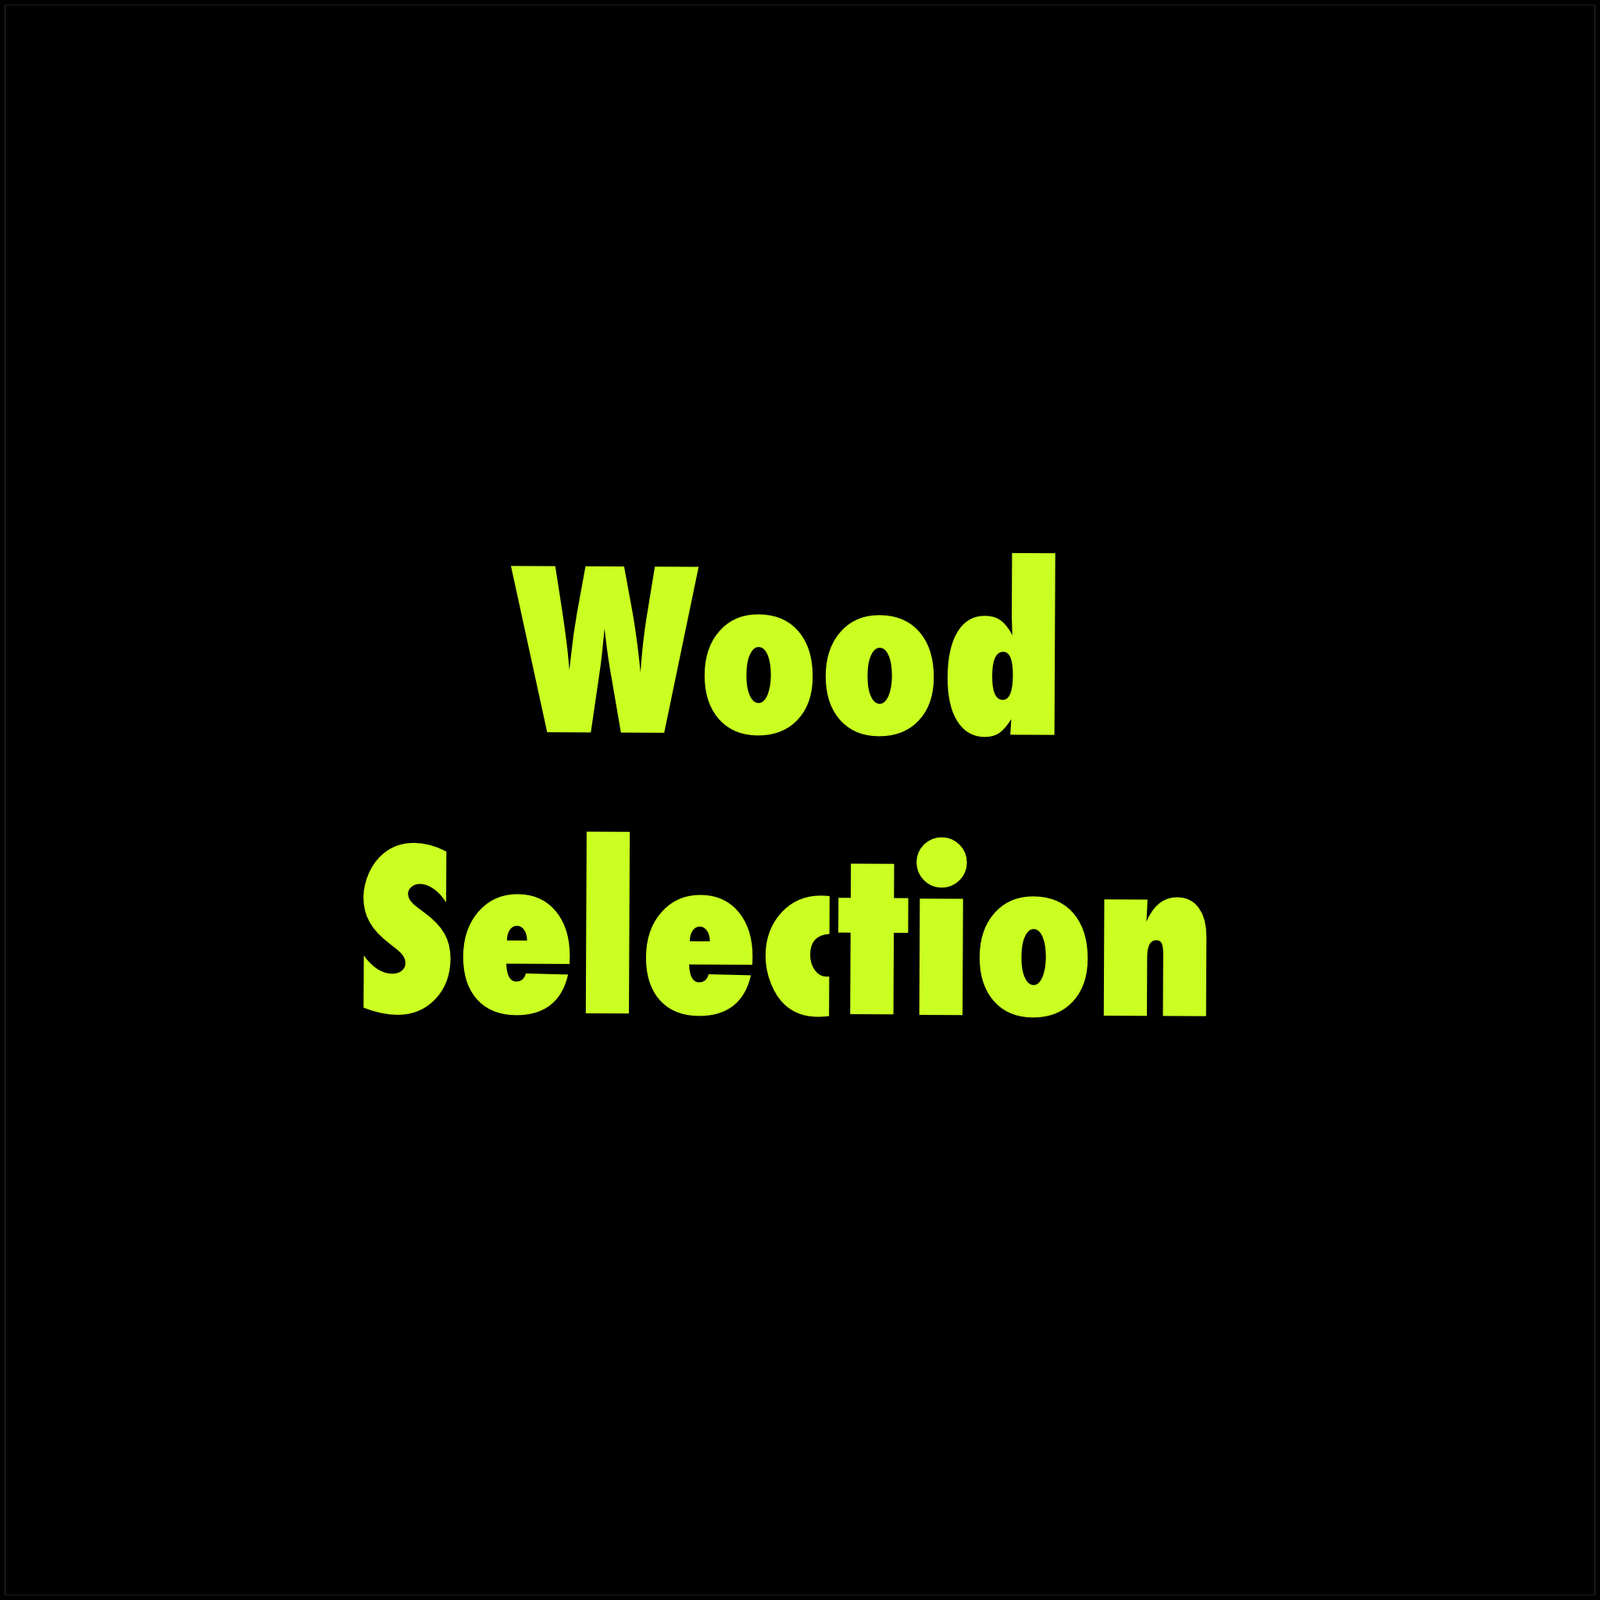 Wood Selection